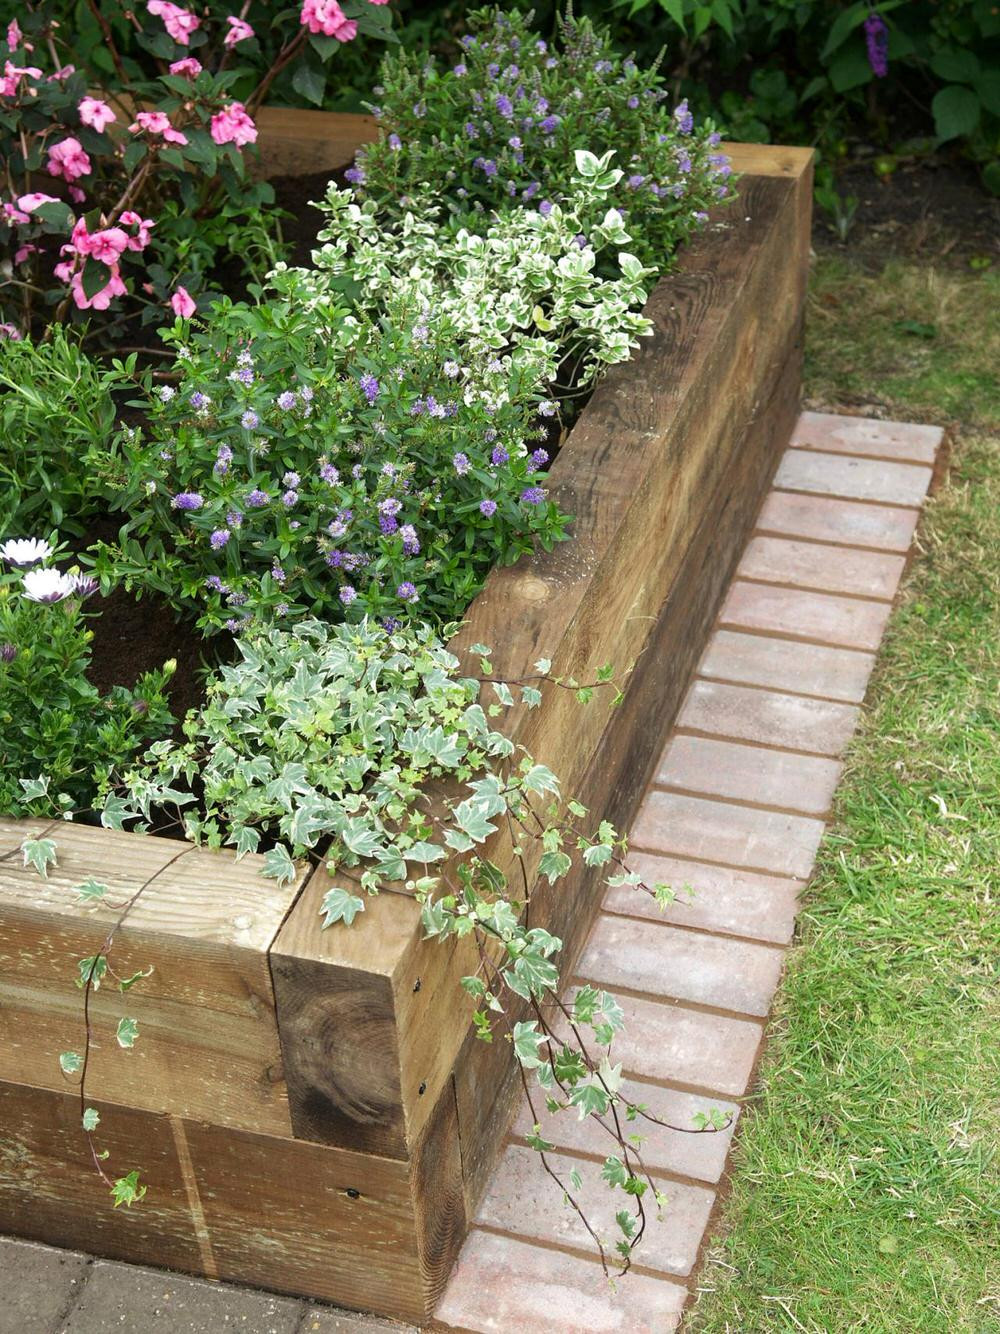 Best ideas about Raised Garden Beds DIY
. Save or Pin DIY Raised Garden Beds & Planter Boxes Now.